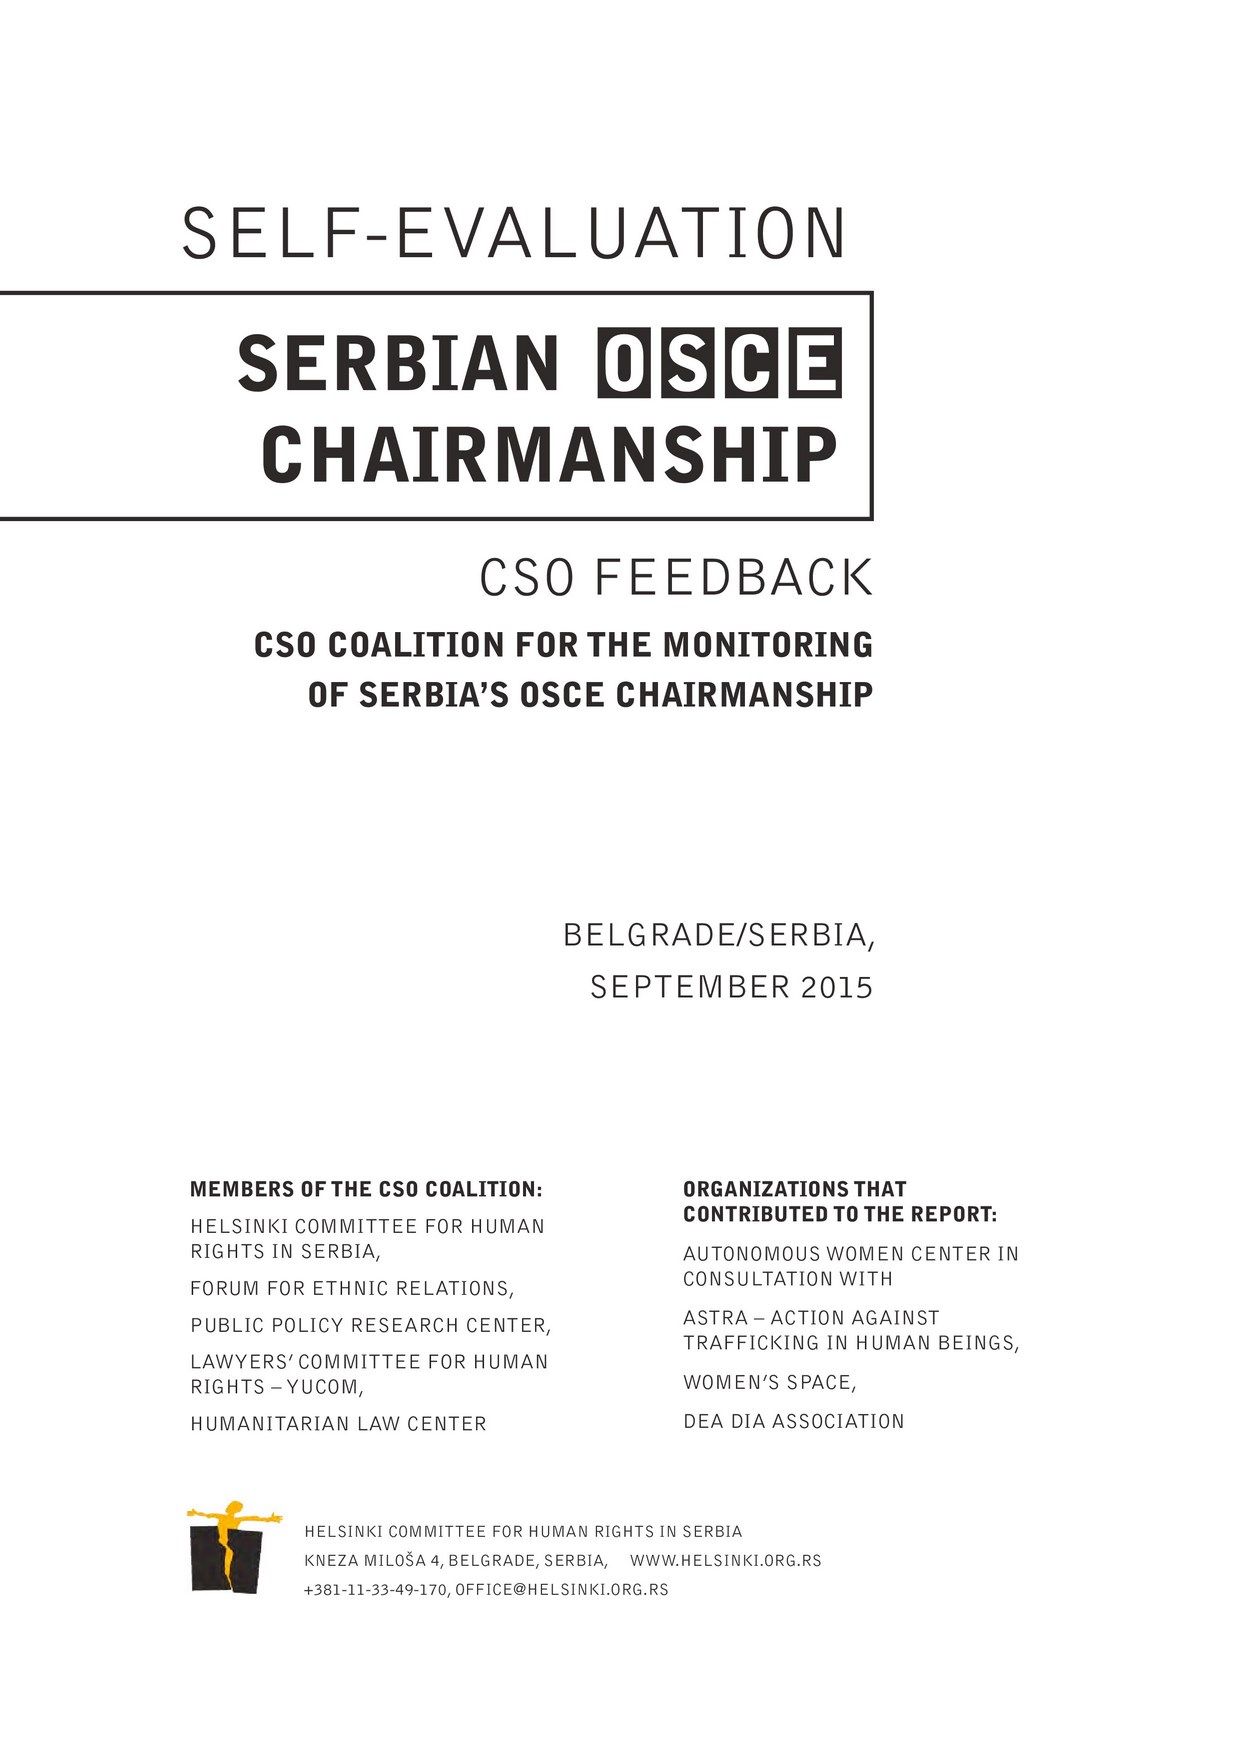 Self evaluation Serbian OSCE Chairmanship